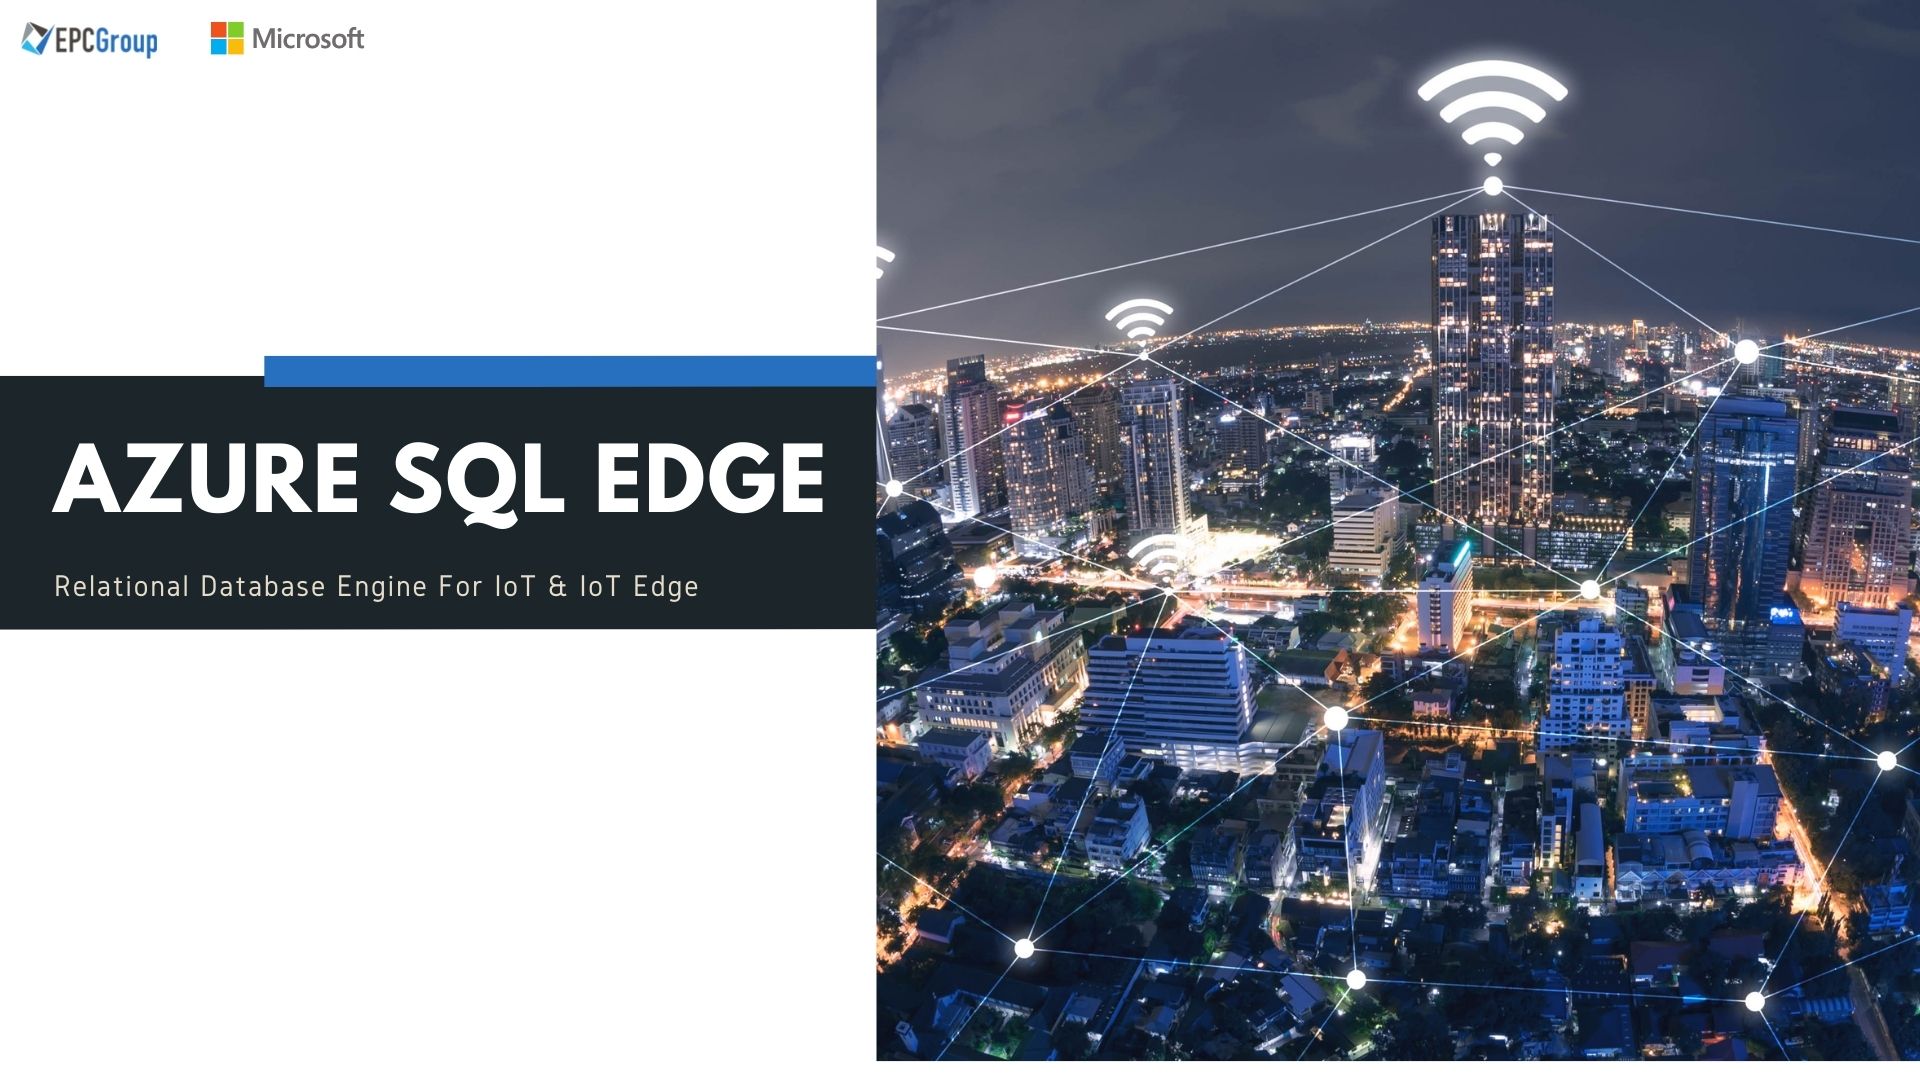 Microsoft Azure SQL Edge: Relational Database Engine Geared For IoT & IoT Edge Deployments